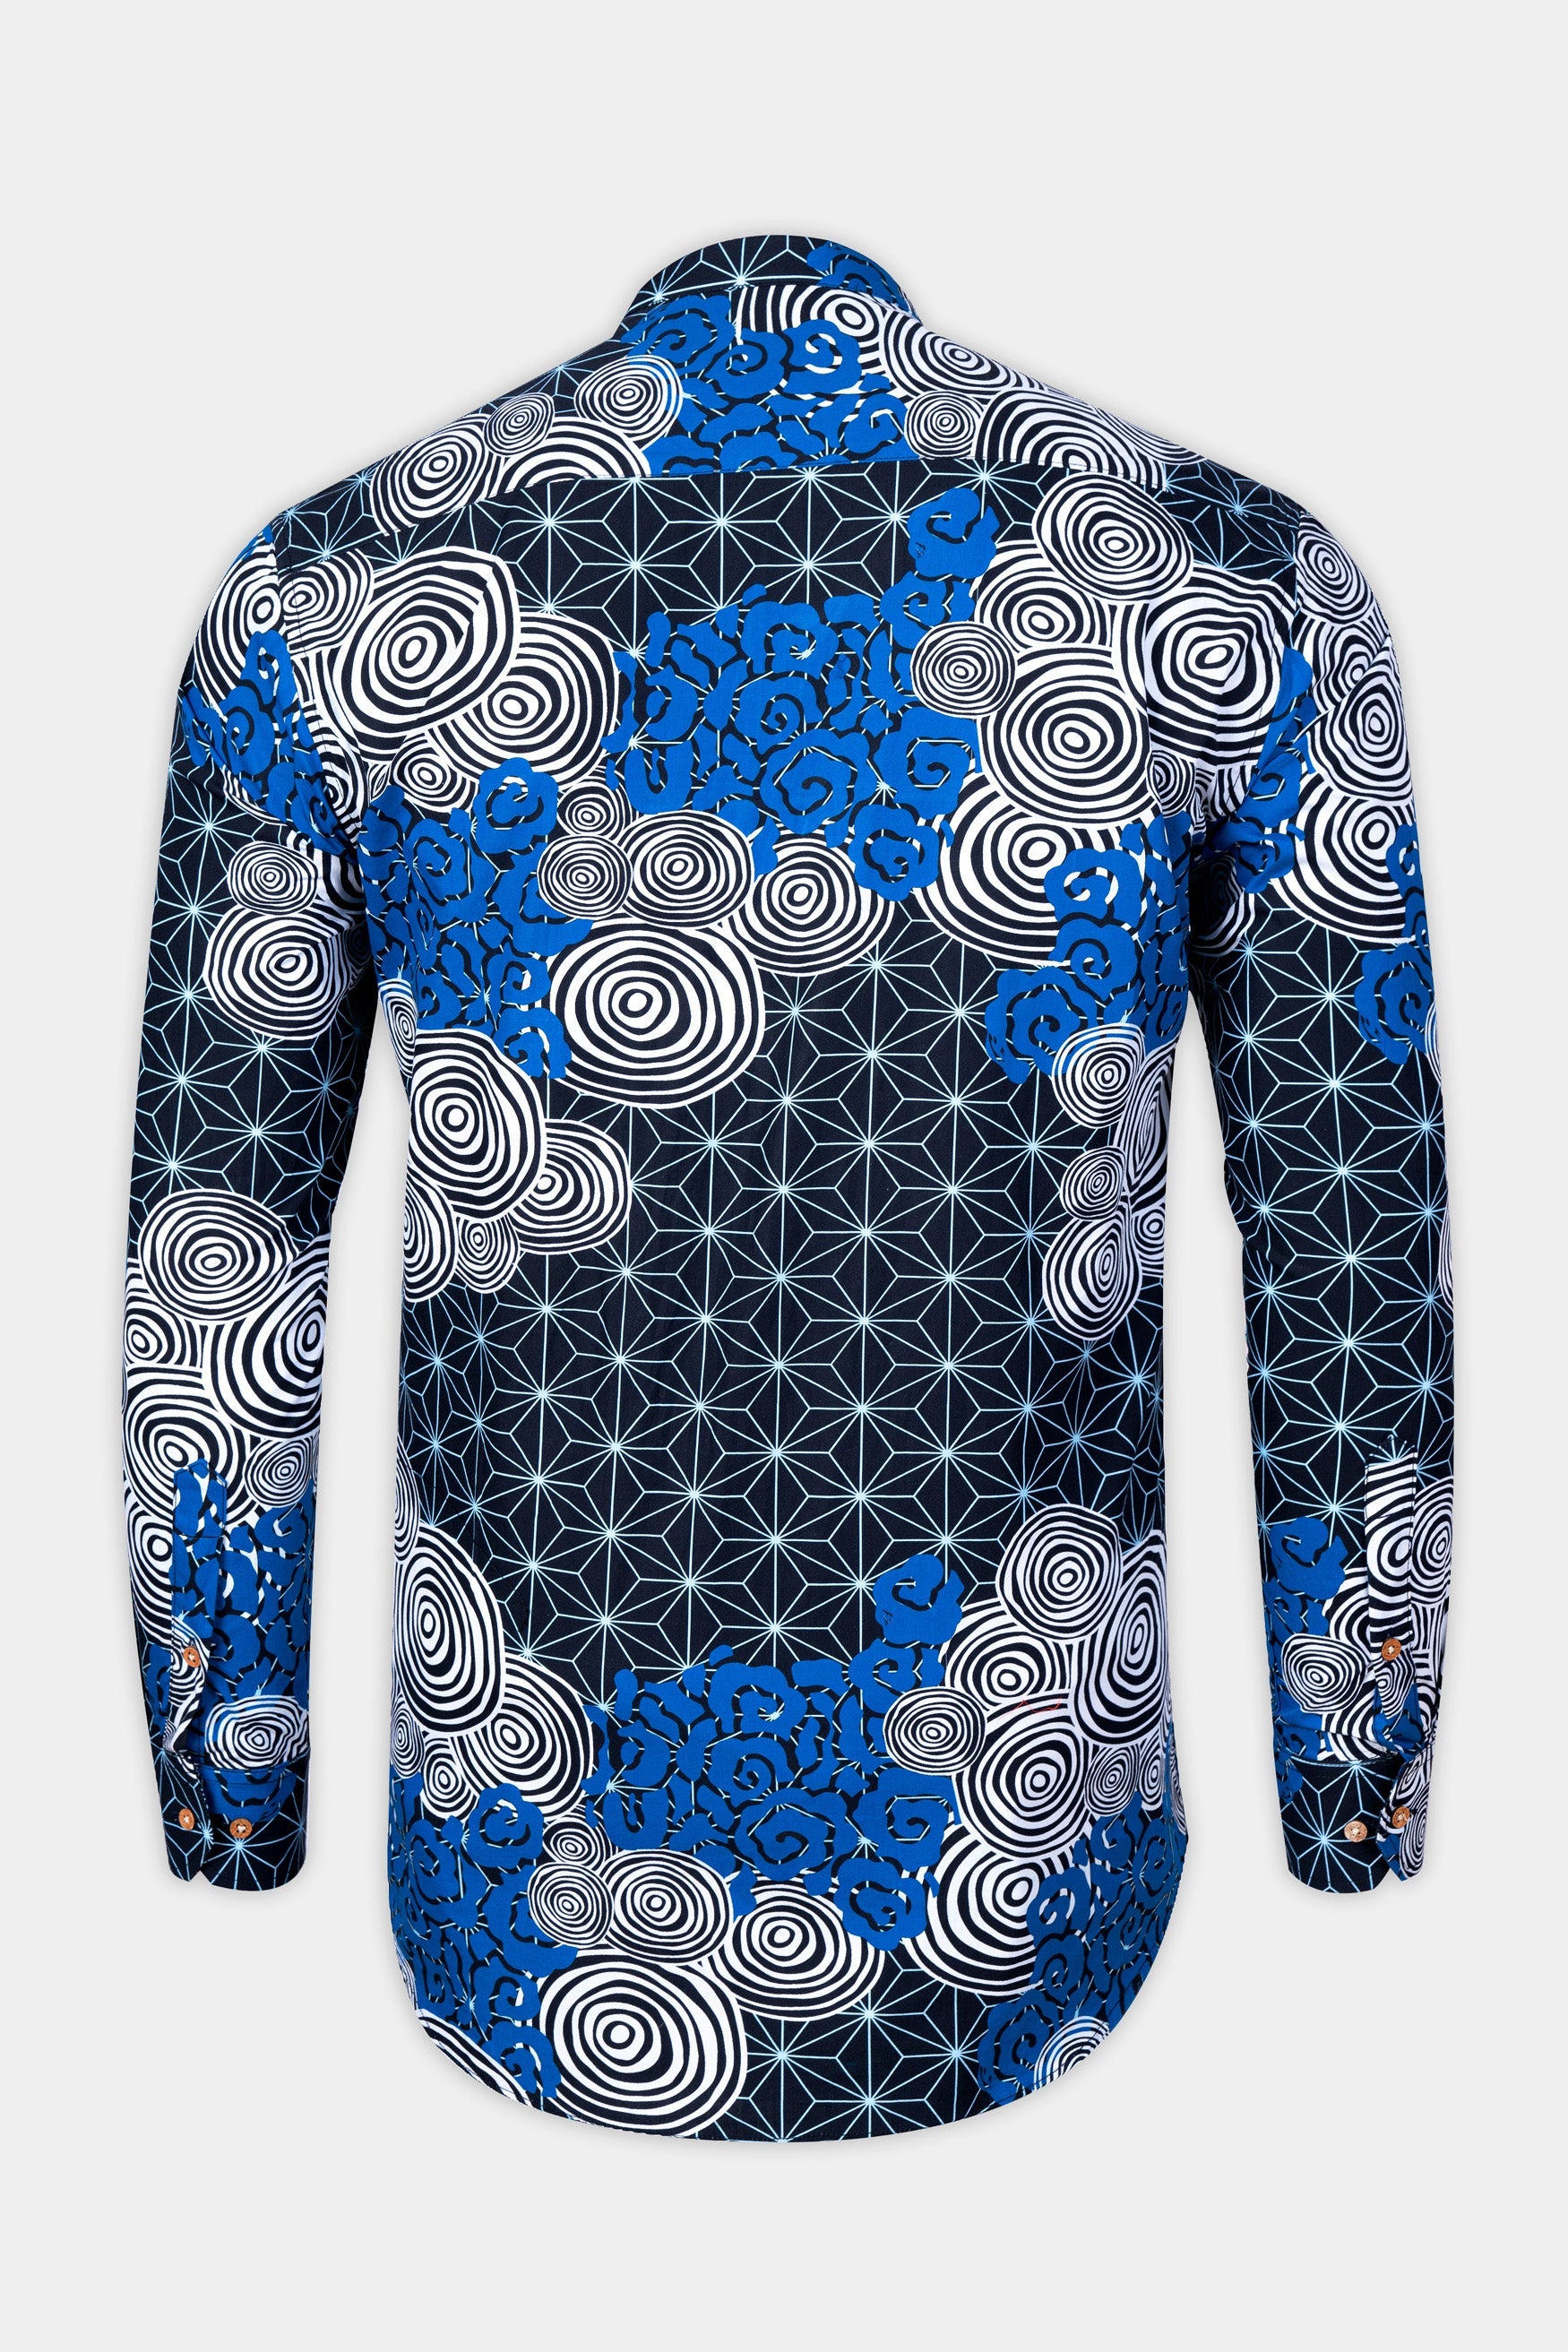 Jade Black And French Blue with Galactic Printed Premium Cotton Kurta Shirt